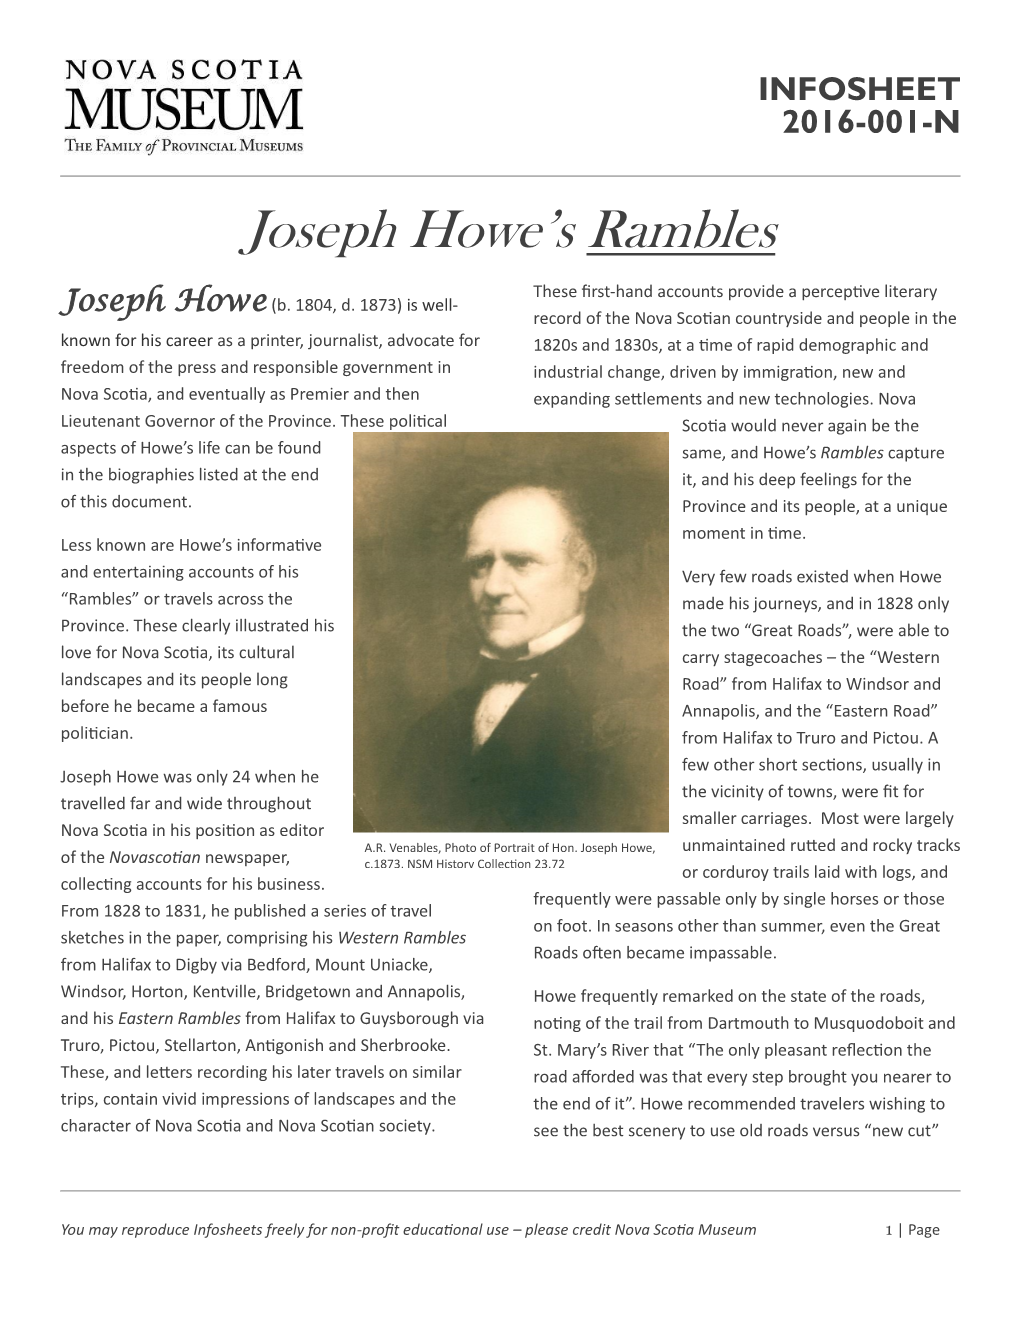 Joseph Howe's Rambles